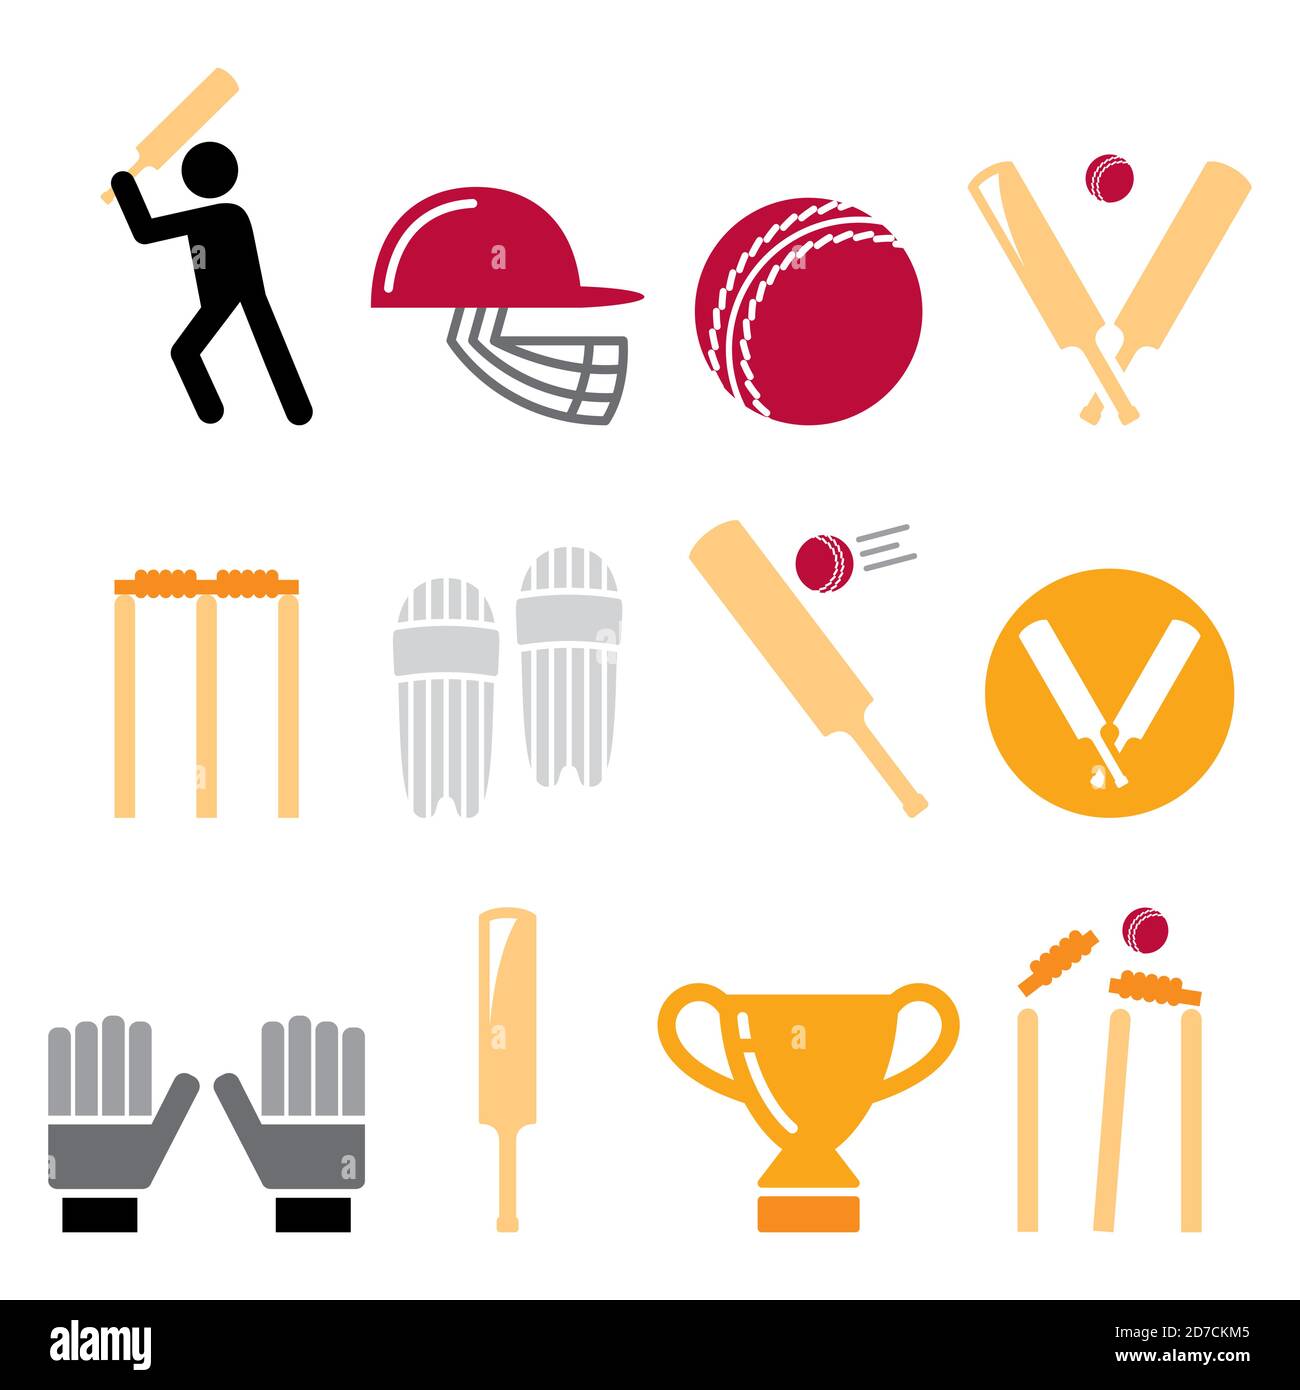 Cricket bat, man playing cricket, cricket equipment - sport vector icons set Stock Vector